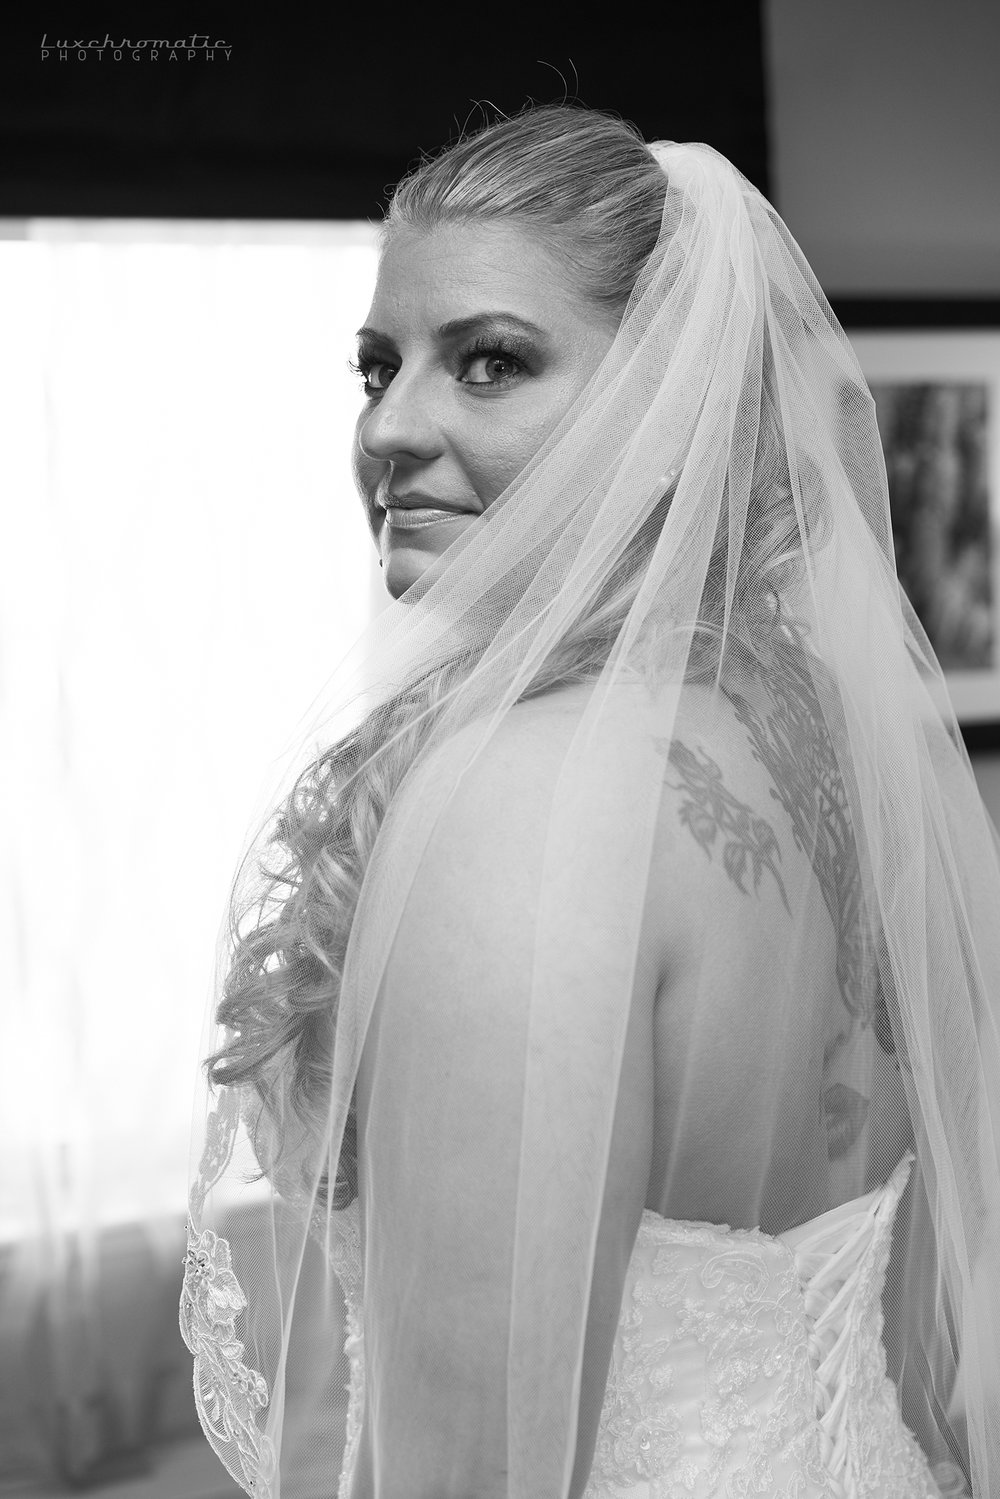 081217_Rachel_Chris_a0150-weddingdress-bride-weddingphotography-weddingphotographer-bridal-groom-wedding-engagementring-proposal-brides-diamondring-sonyalpha-sony-sonya9-sonya7rii-sanfrancisco-sf-bayarea-photographer-profoto-murrietas-well.jpg